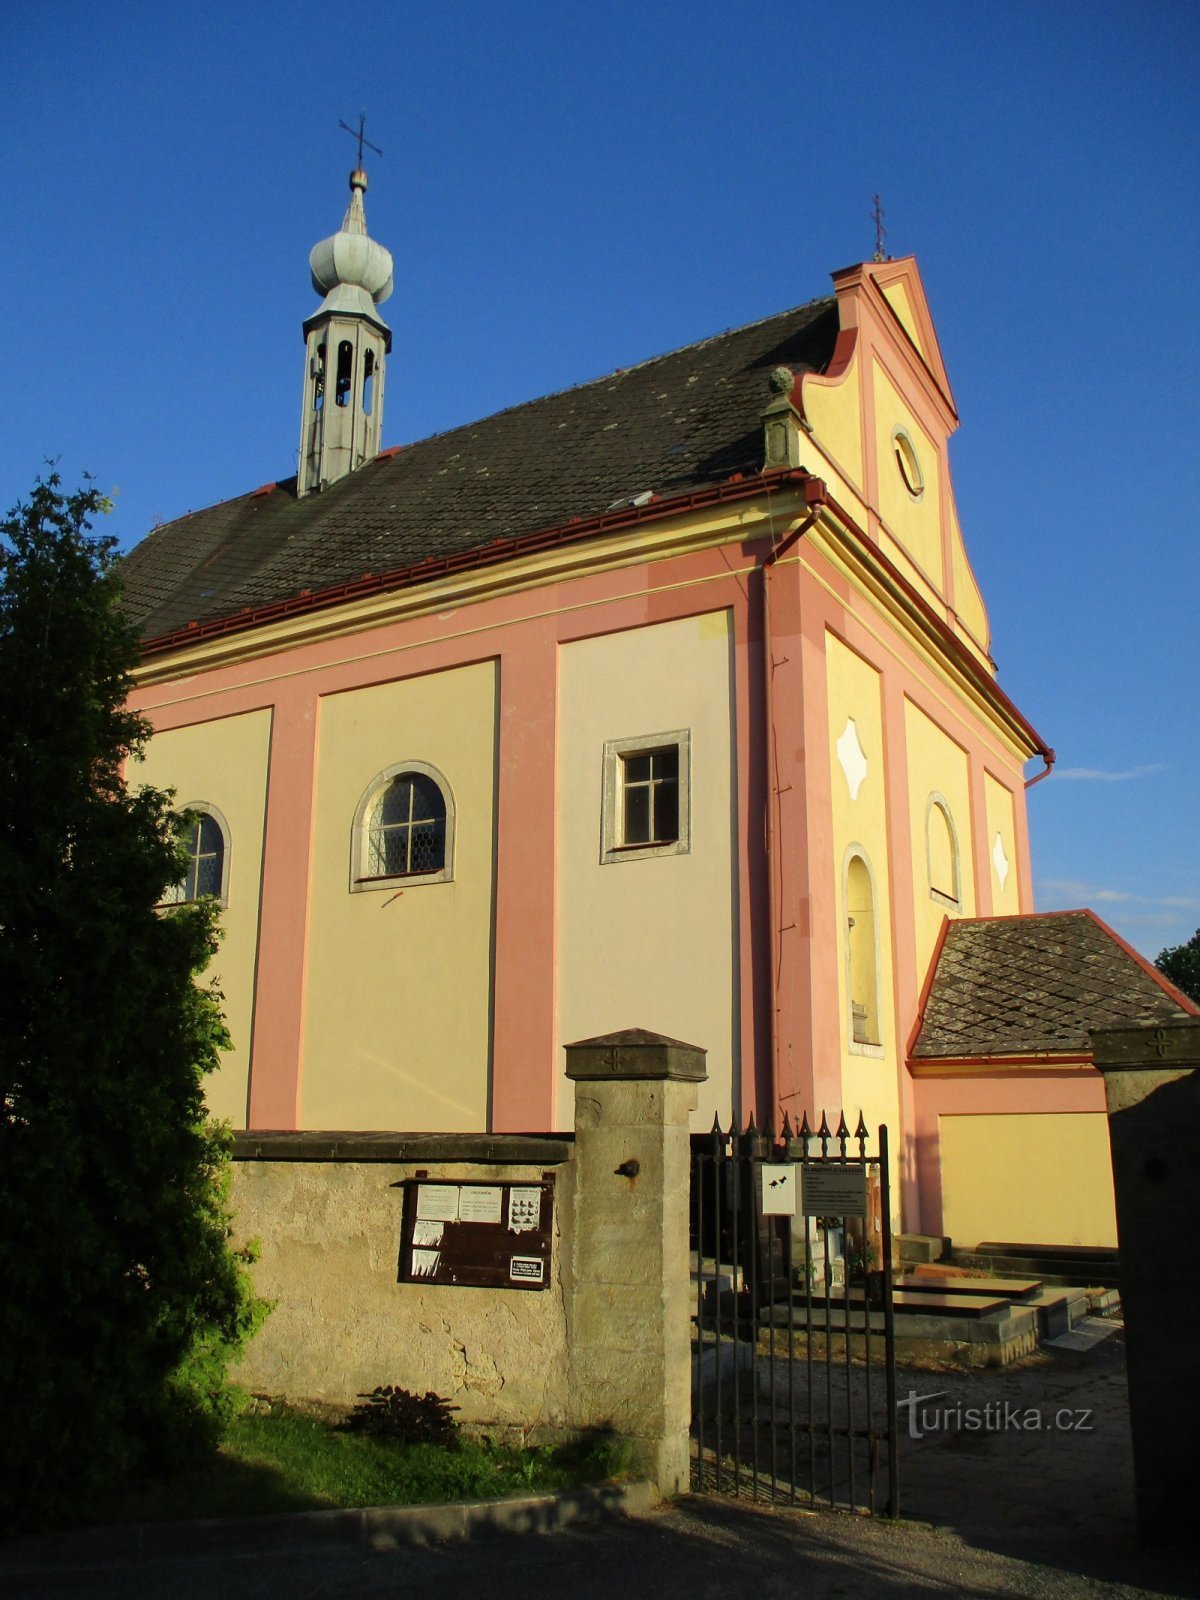 Church of St. Spirit (Hořičky)